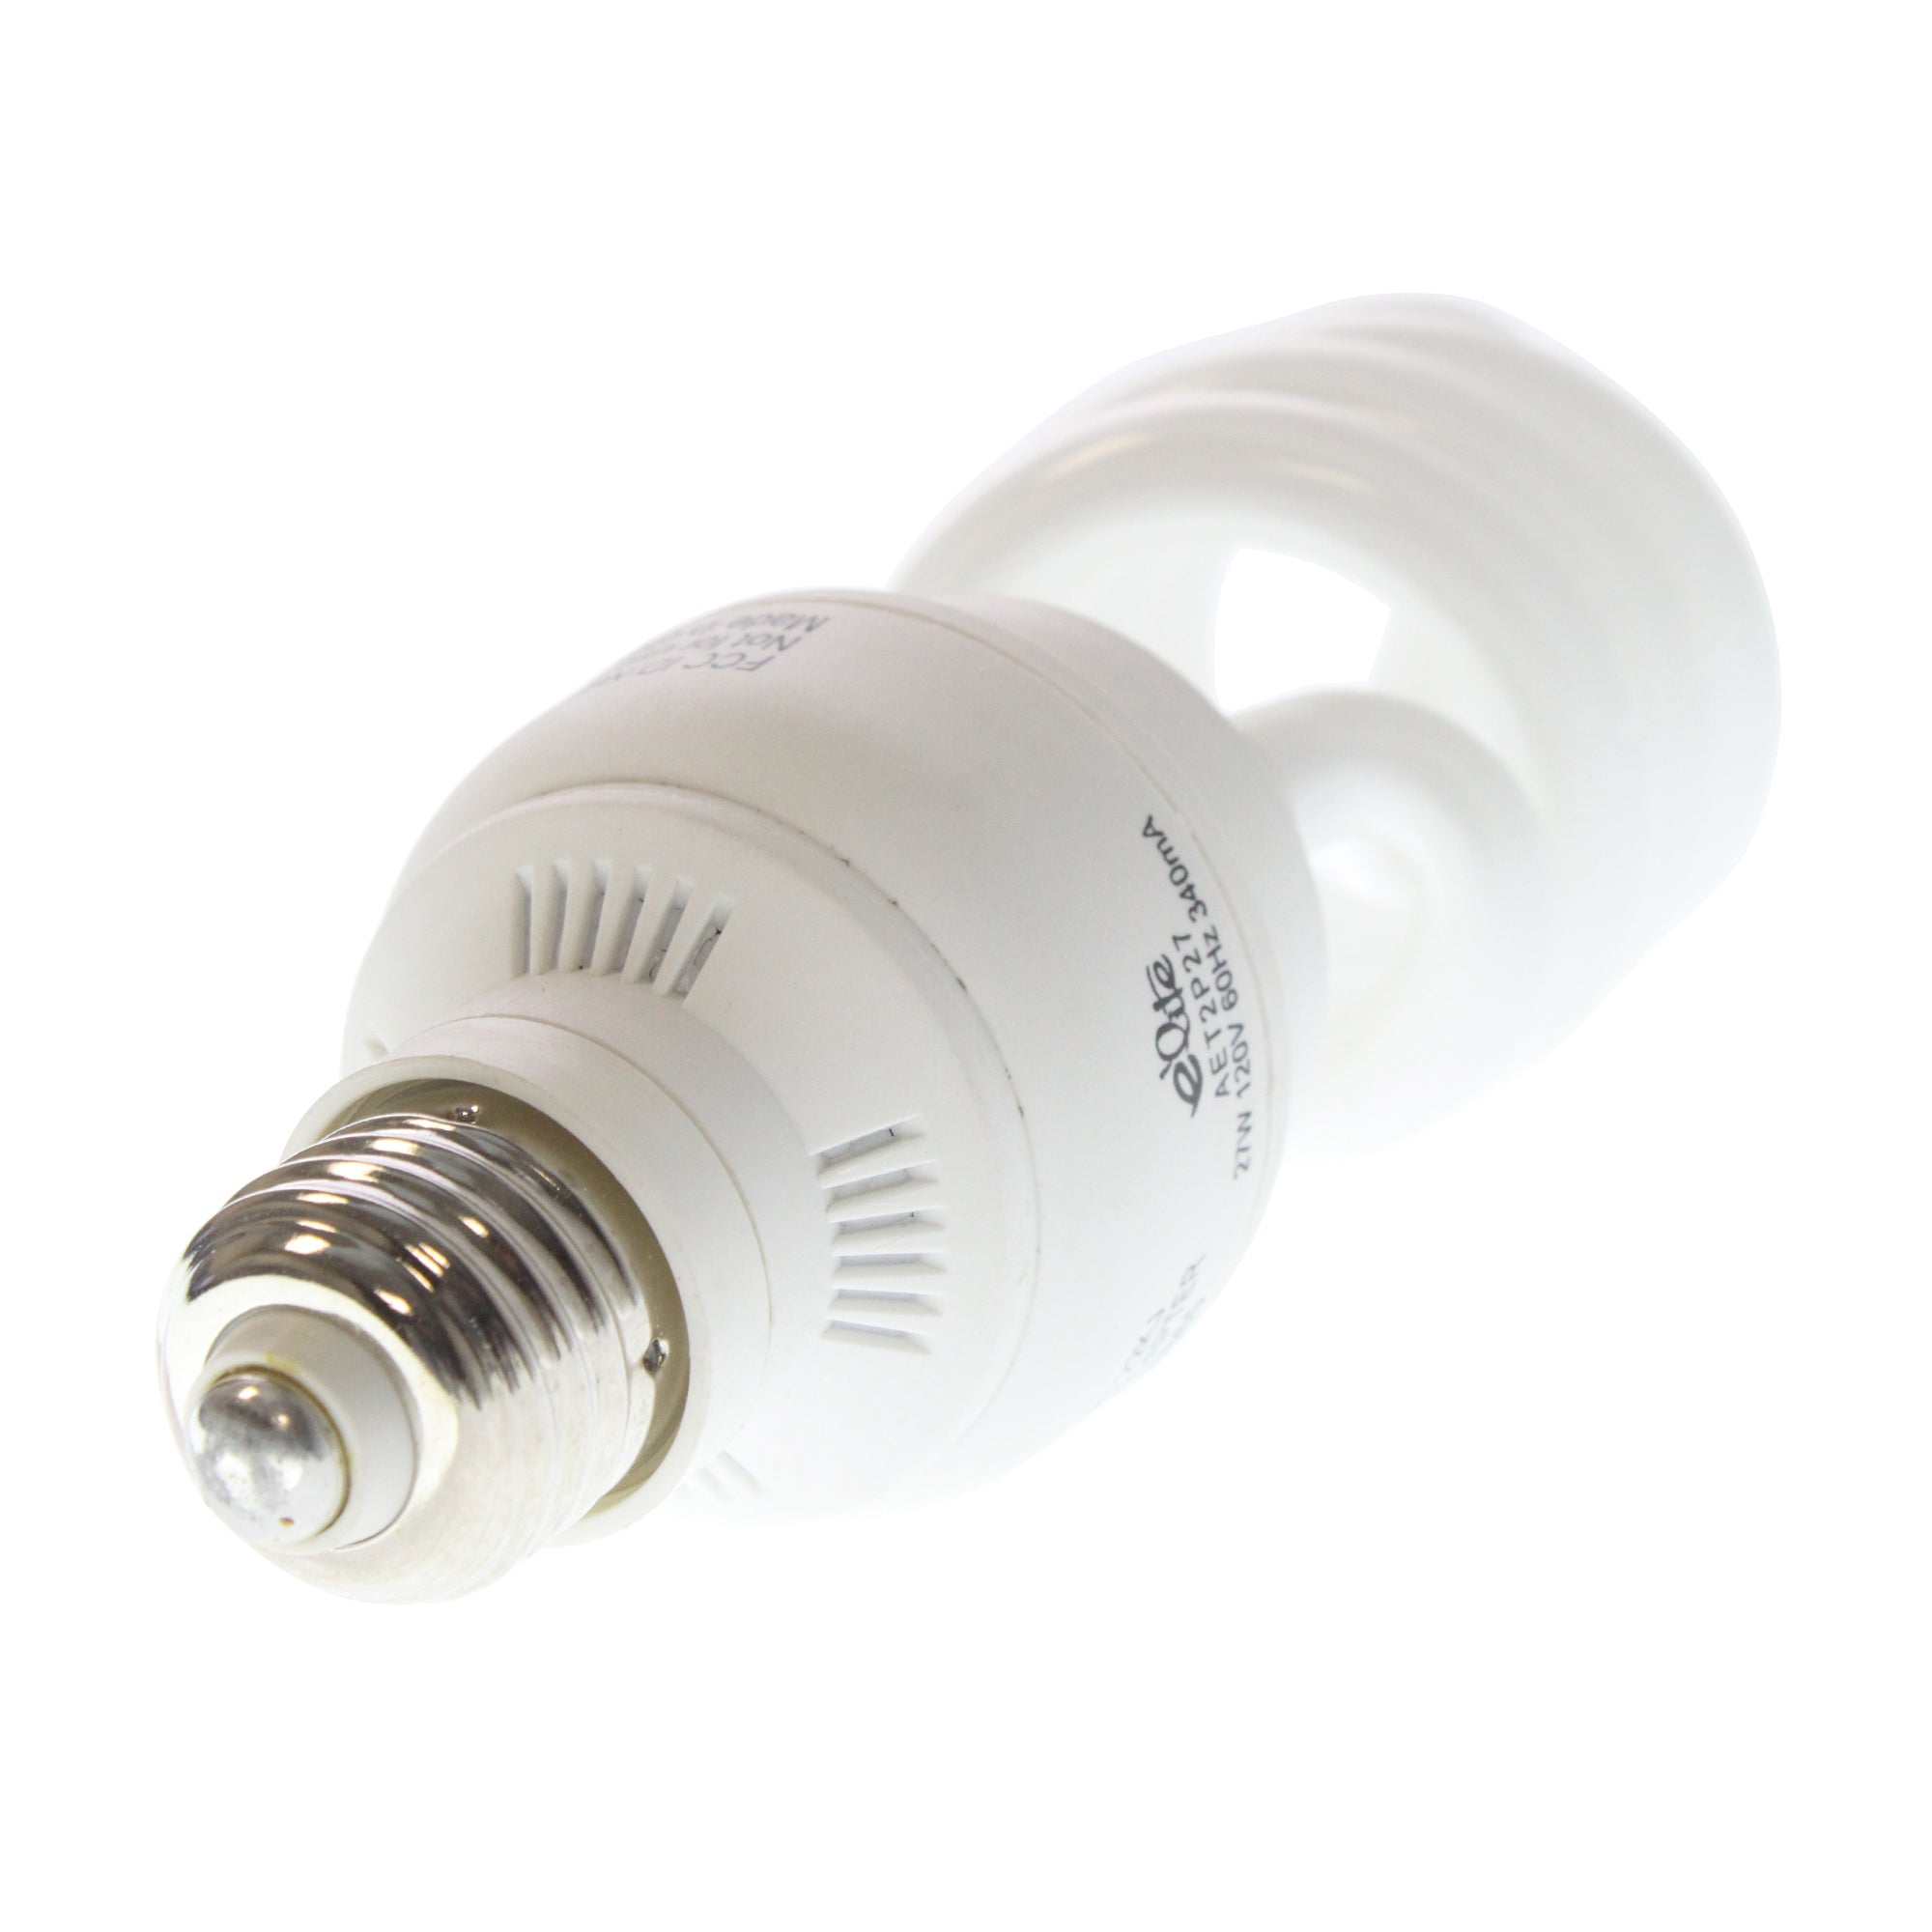 A.L.P. Lighting Components, ALP LIGHTING AET2P27 COMPACT FLOURESCENT CFL LAMP, E26 MED BASE, 3K, 27-WATT